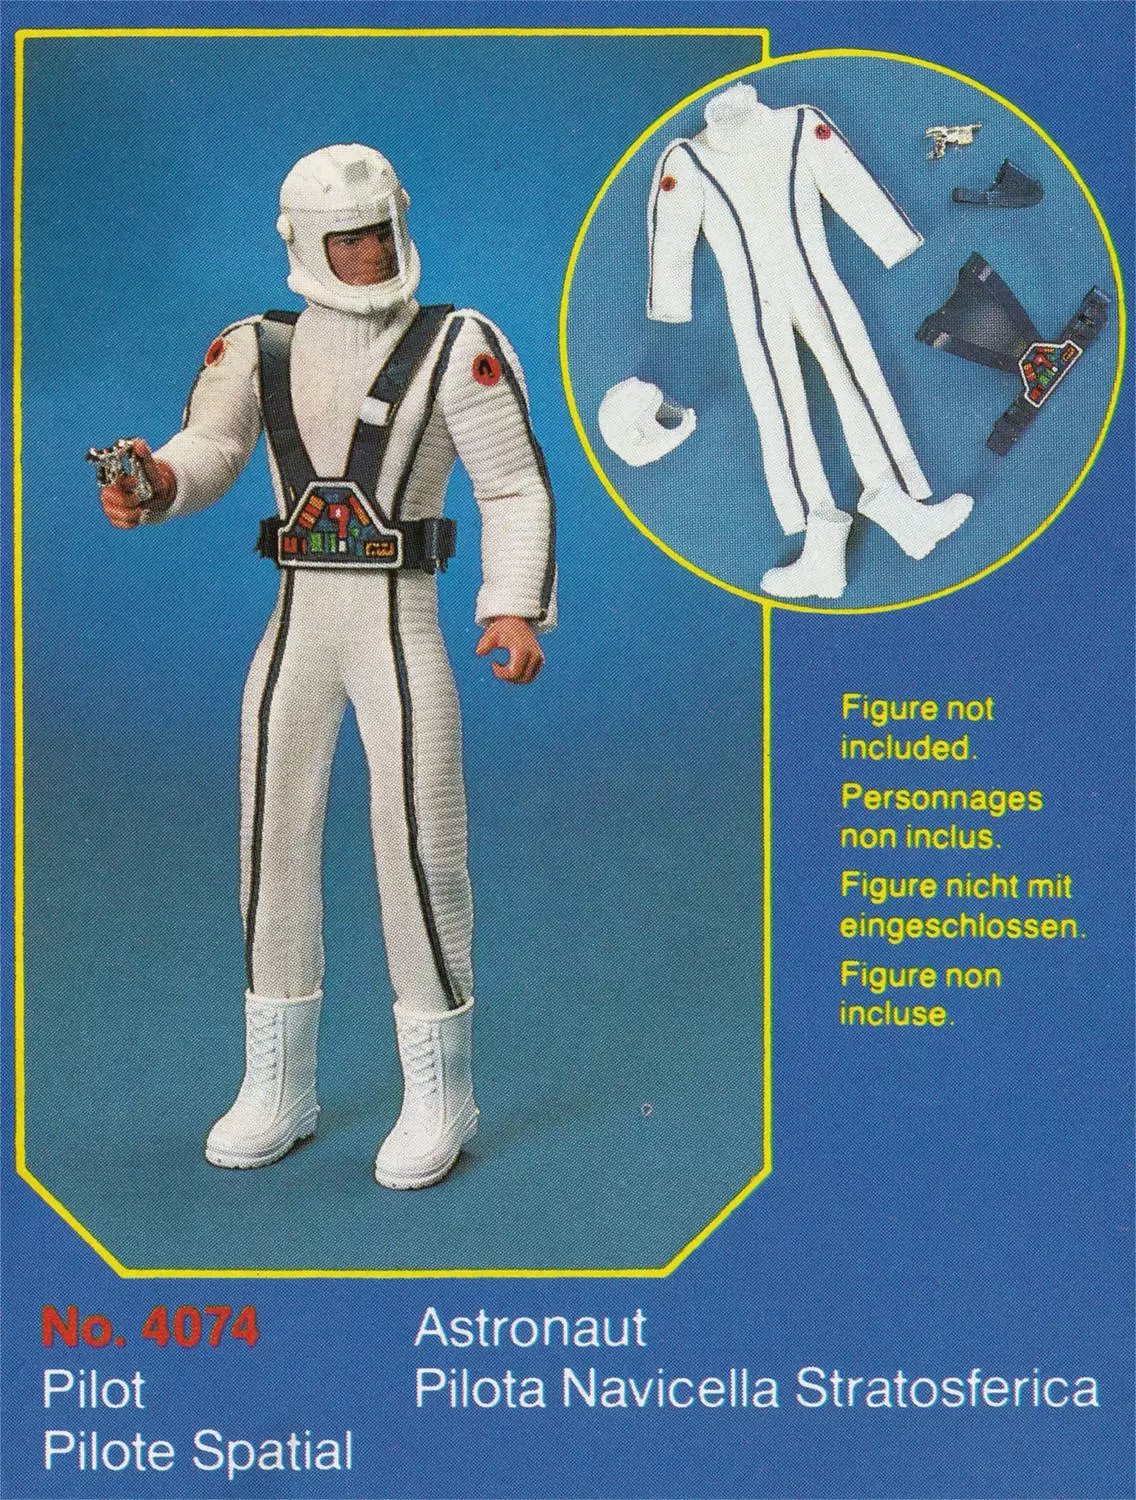 Big Jim Suits - Astronaut